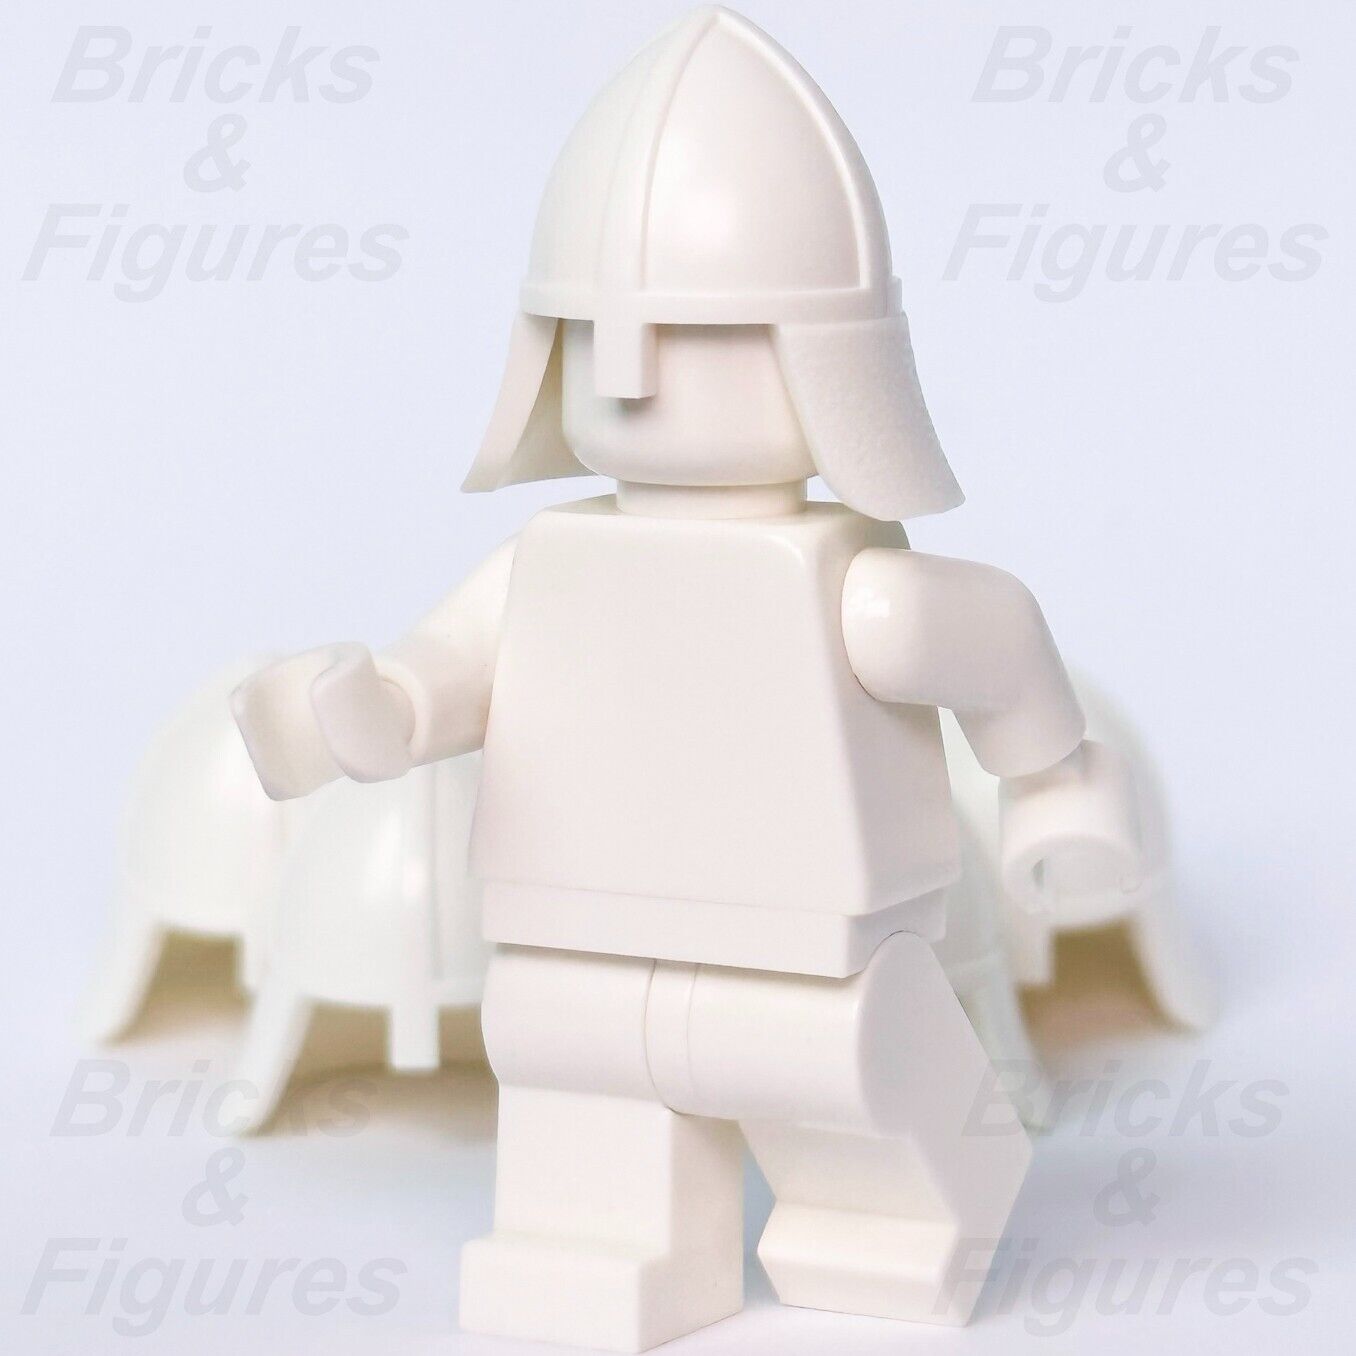 5 x Castle LEGO Knight Helmet w/ Neck Protector White Minifigure Part 3844 - Bricks & Figures